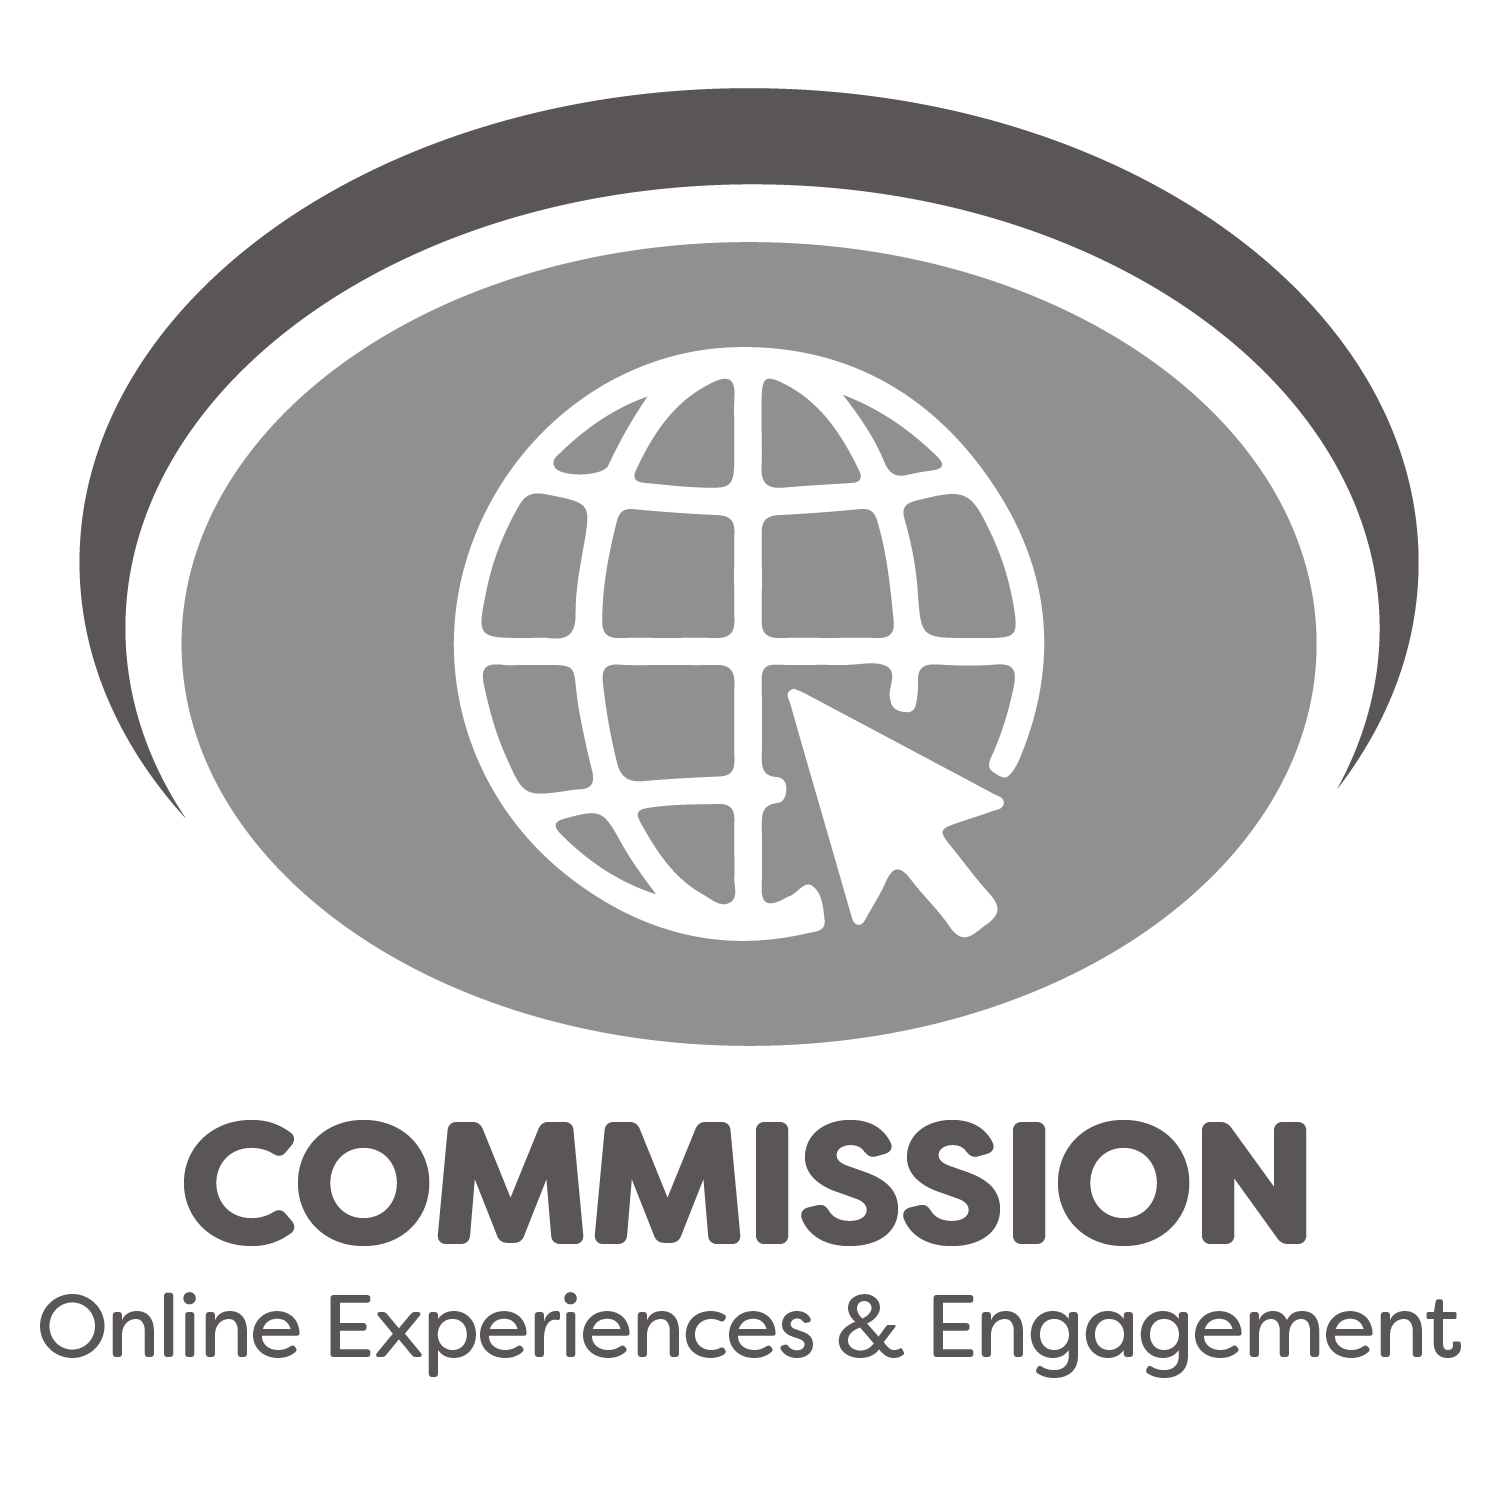 Commission for Online Experiences & Engagement